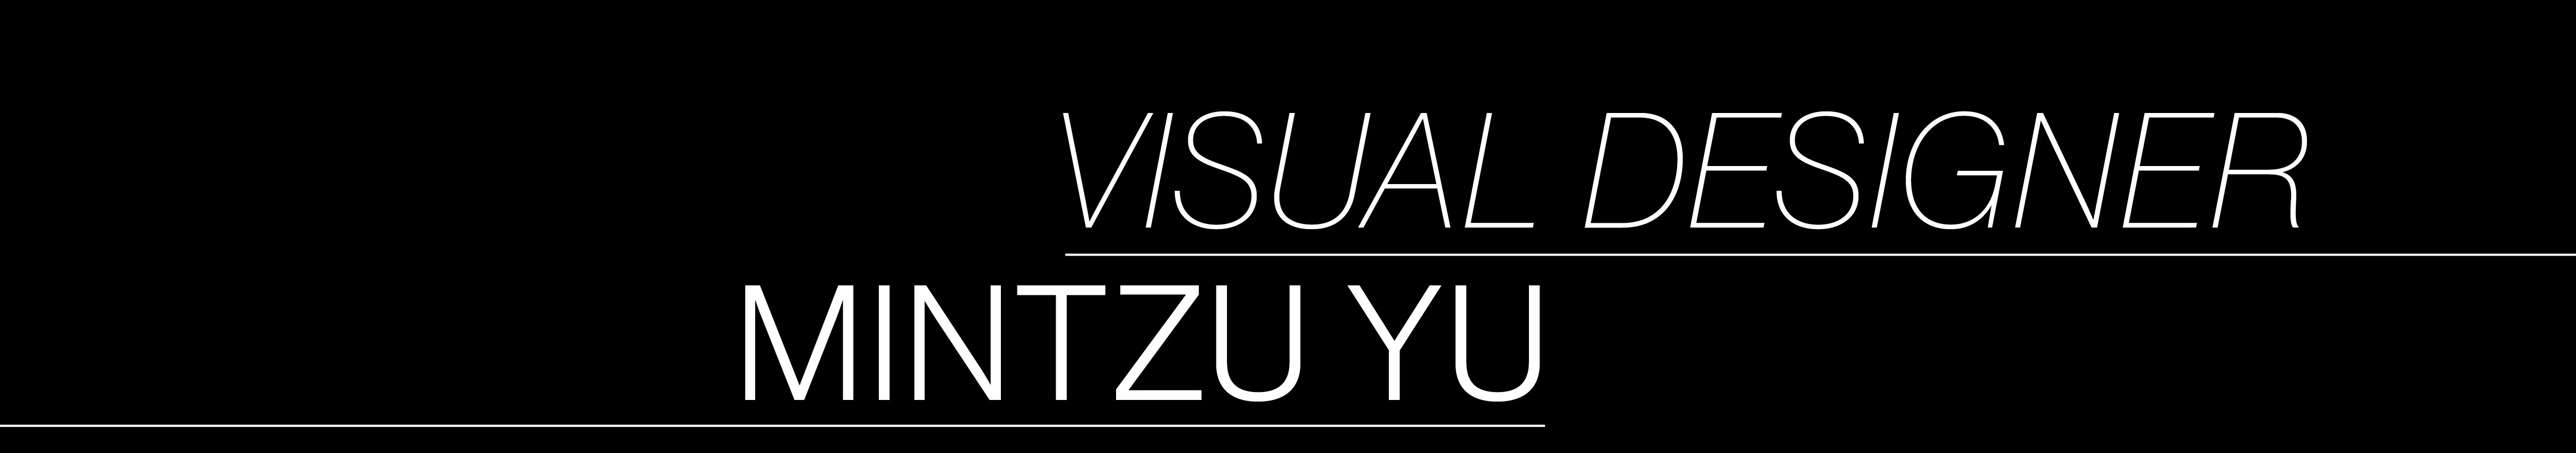 Mintzuy Design's profile banner